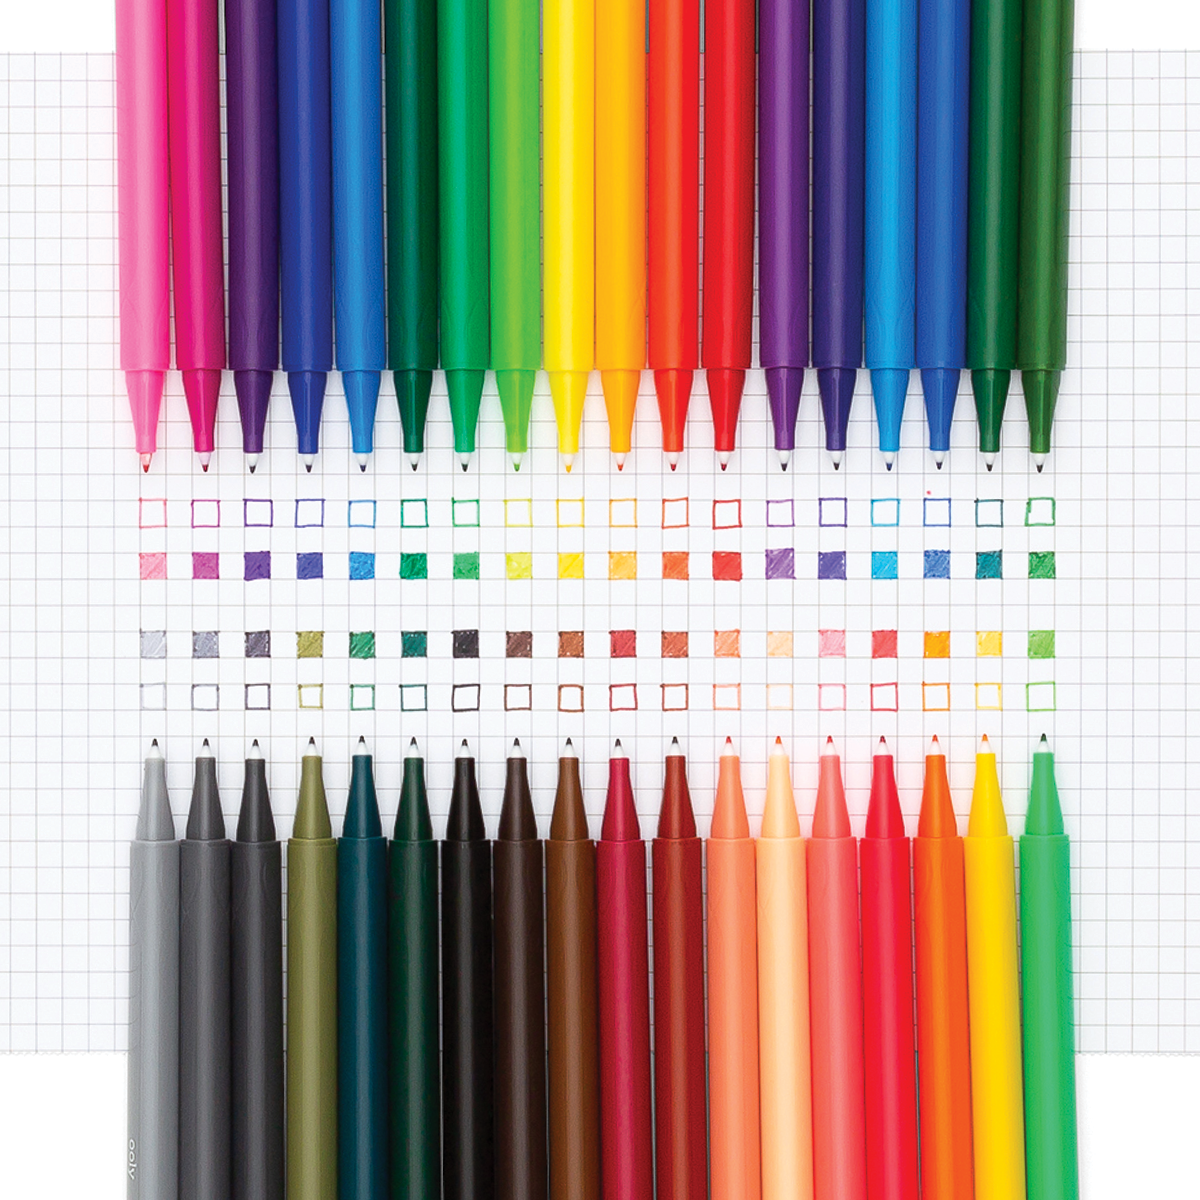 Fine Tip Markers for Adult Coloring Books Felt Tip Markers Art